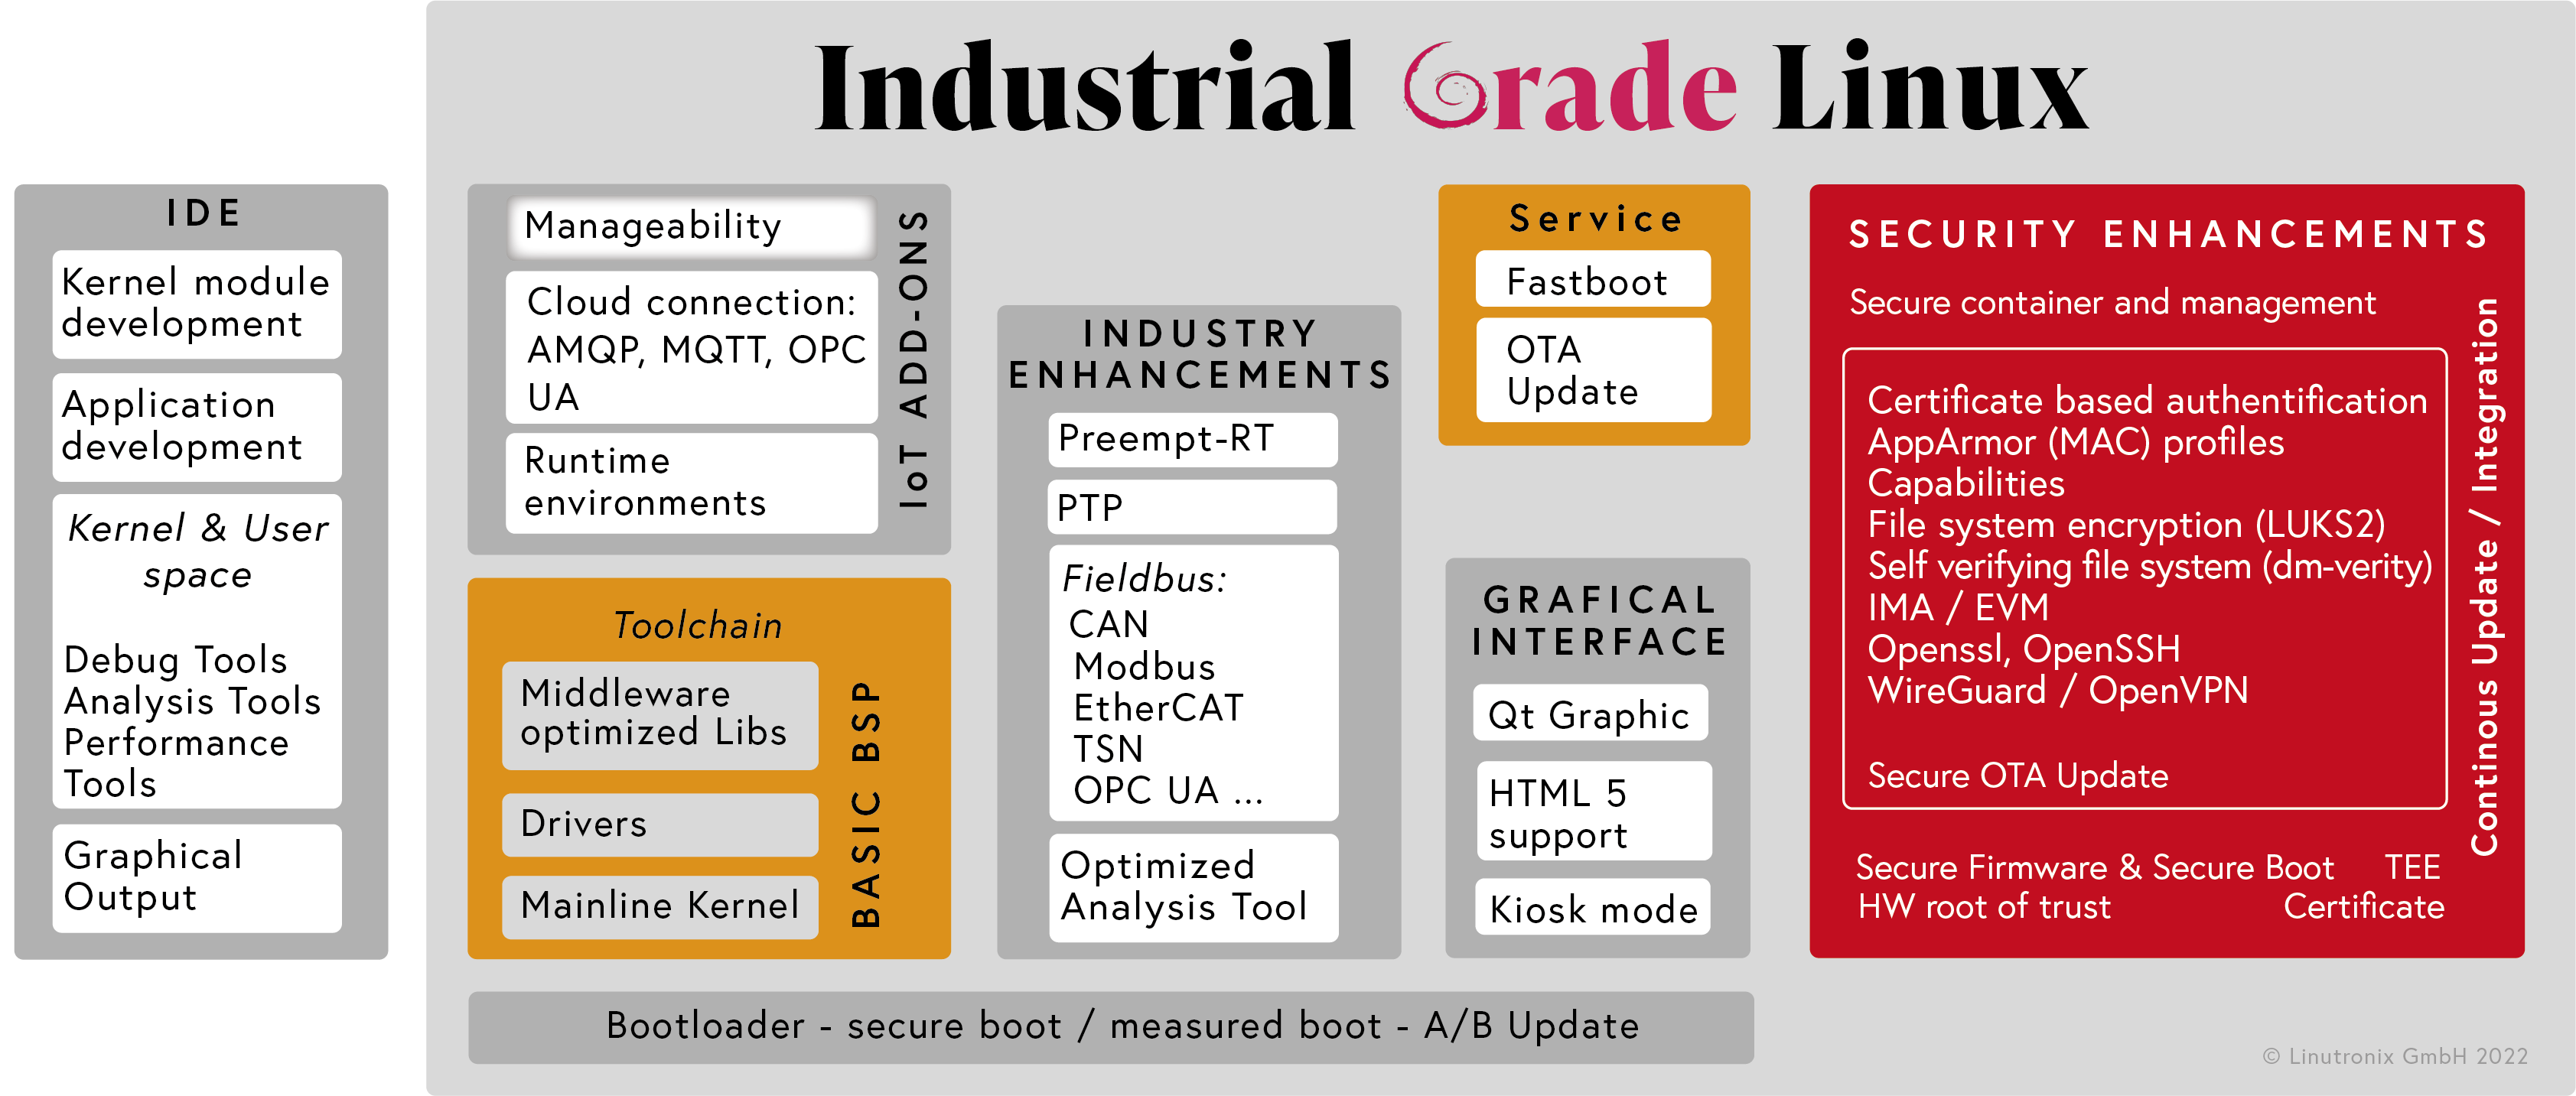 Industrial Grade Linux